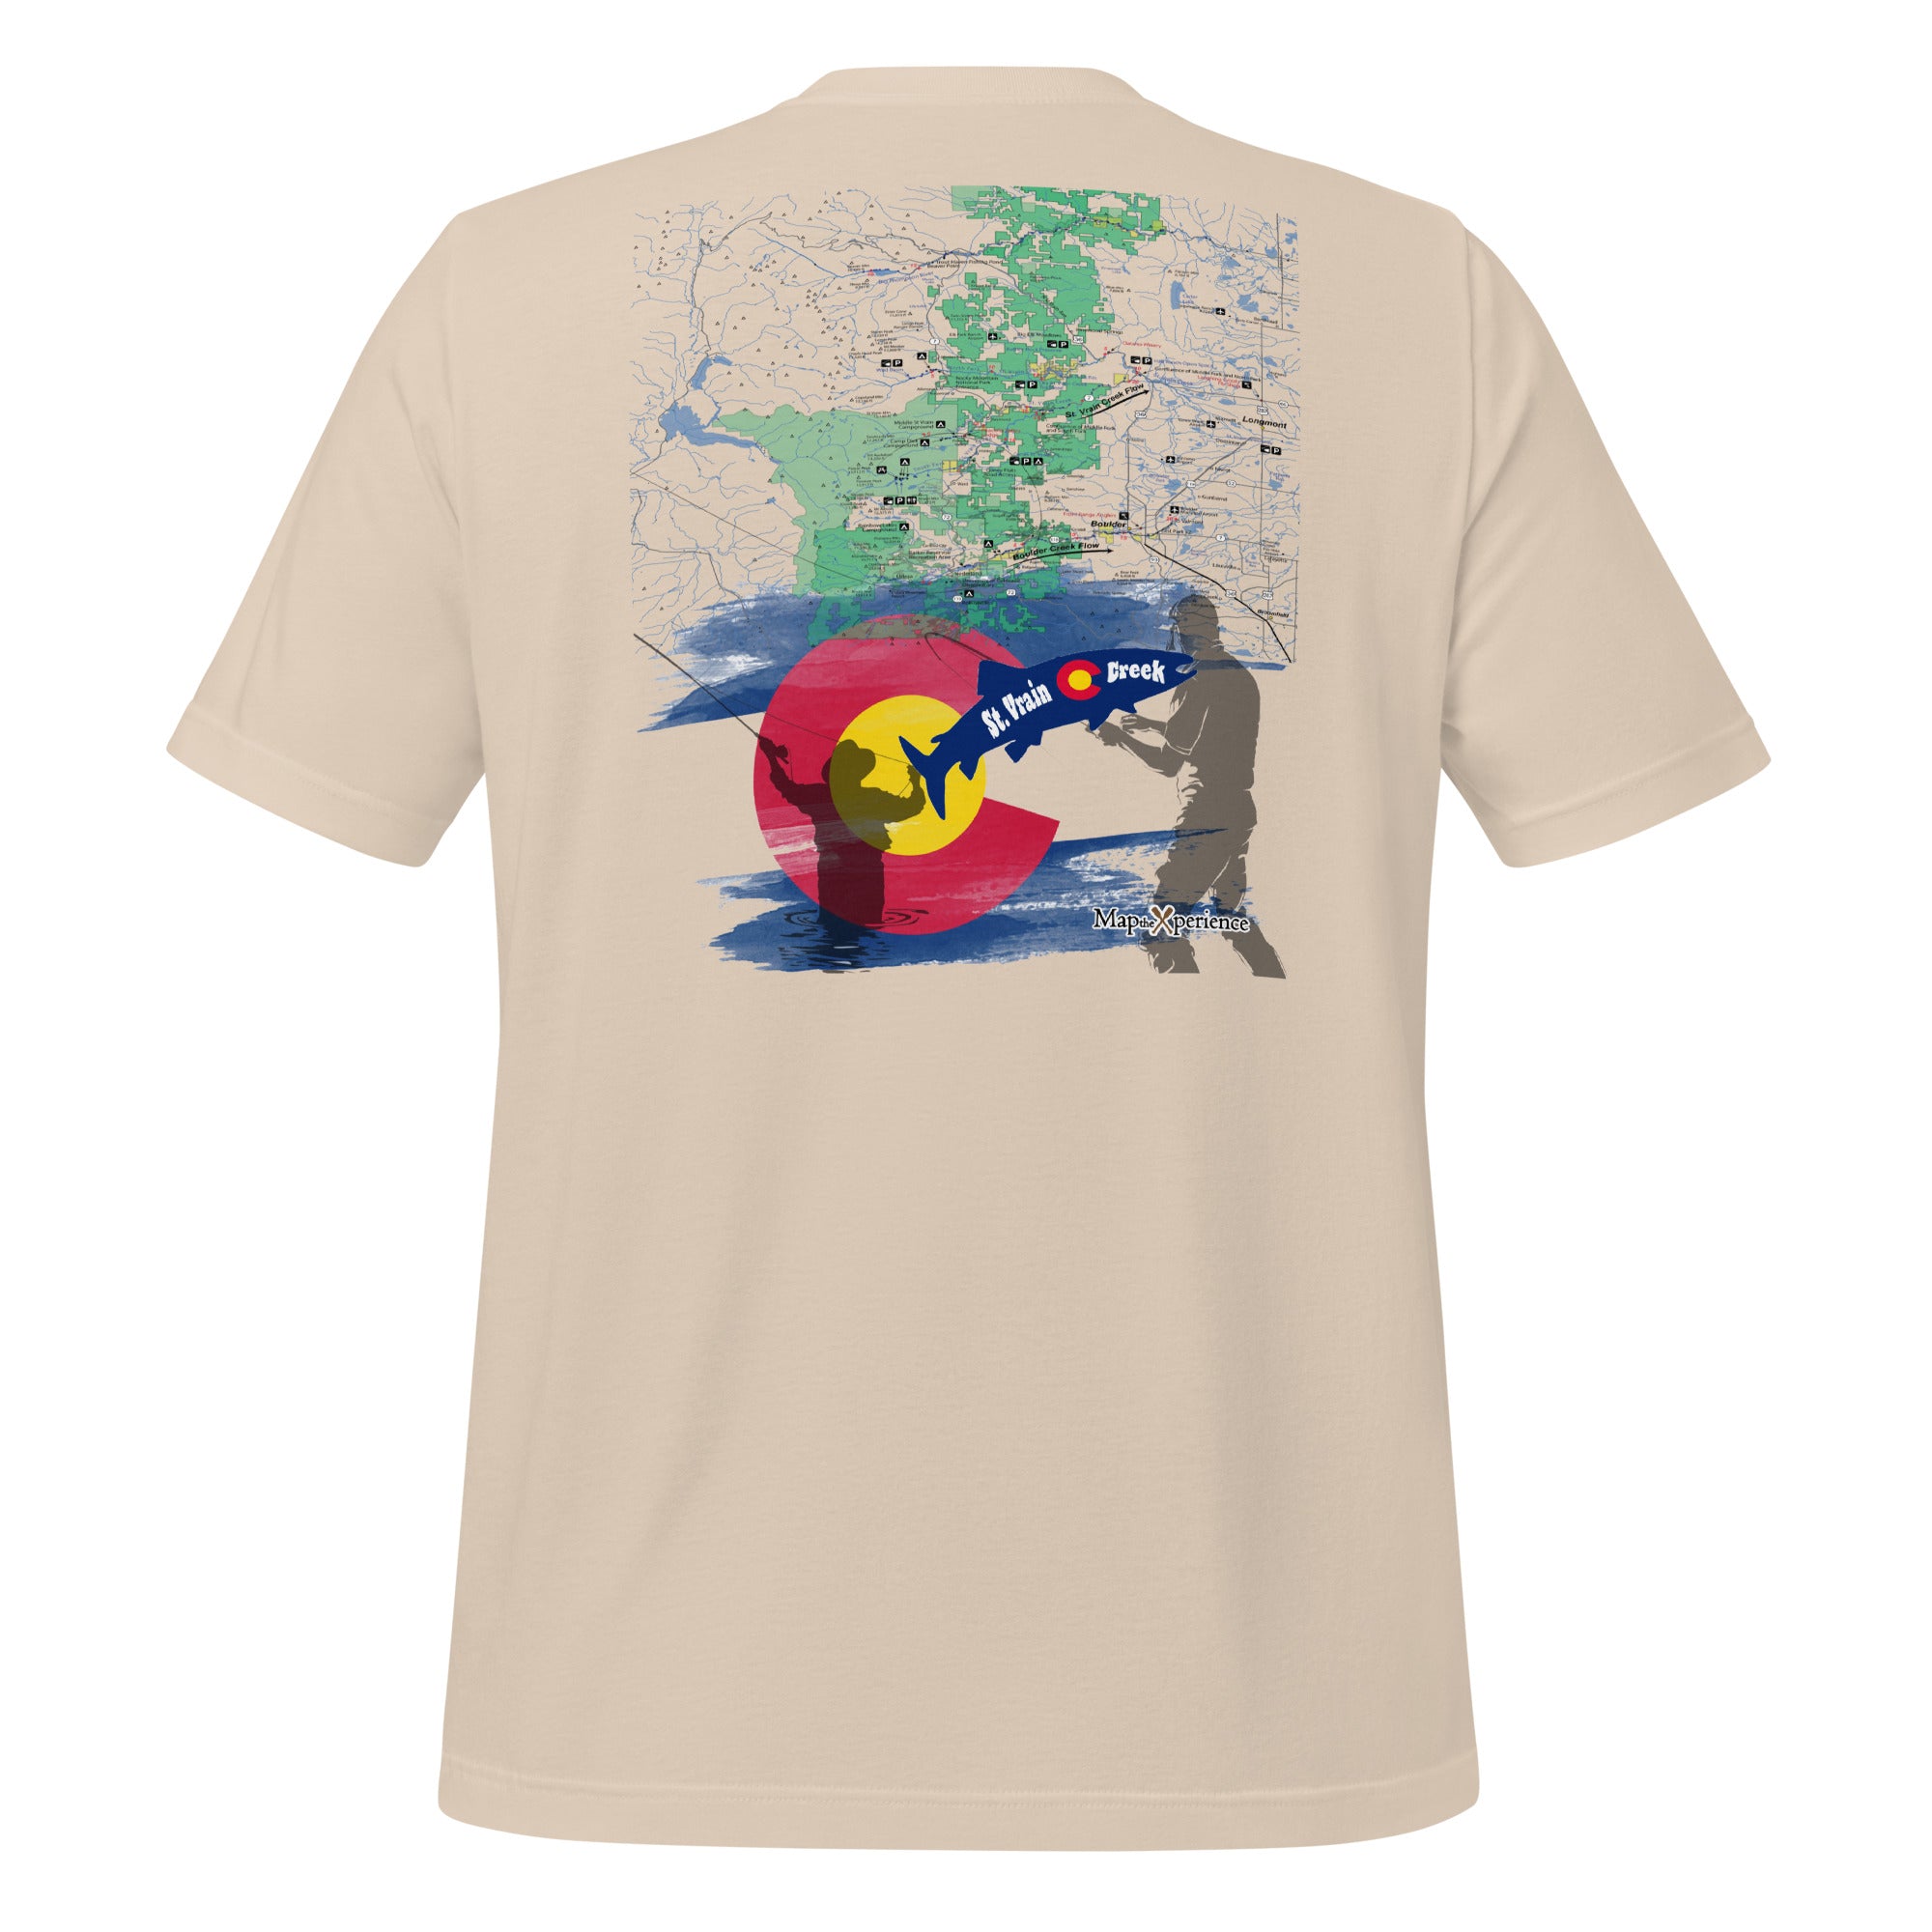 St Vrain Creek, Colorado Performance t-shirt